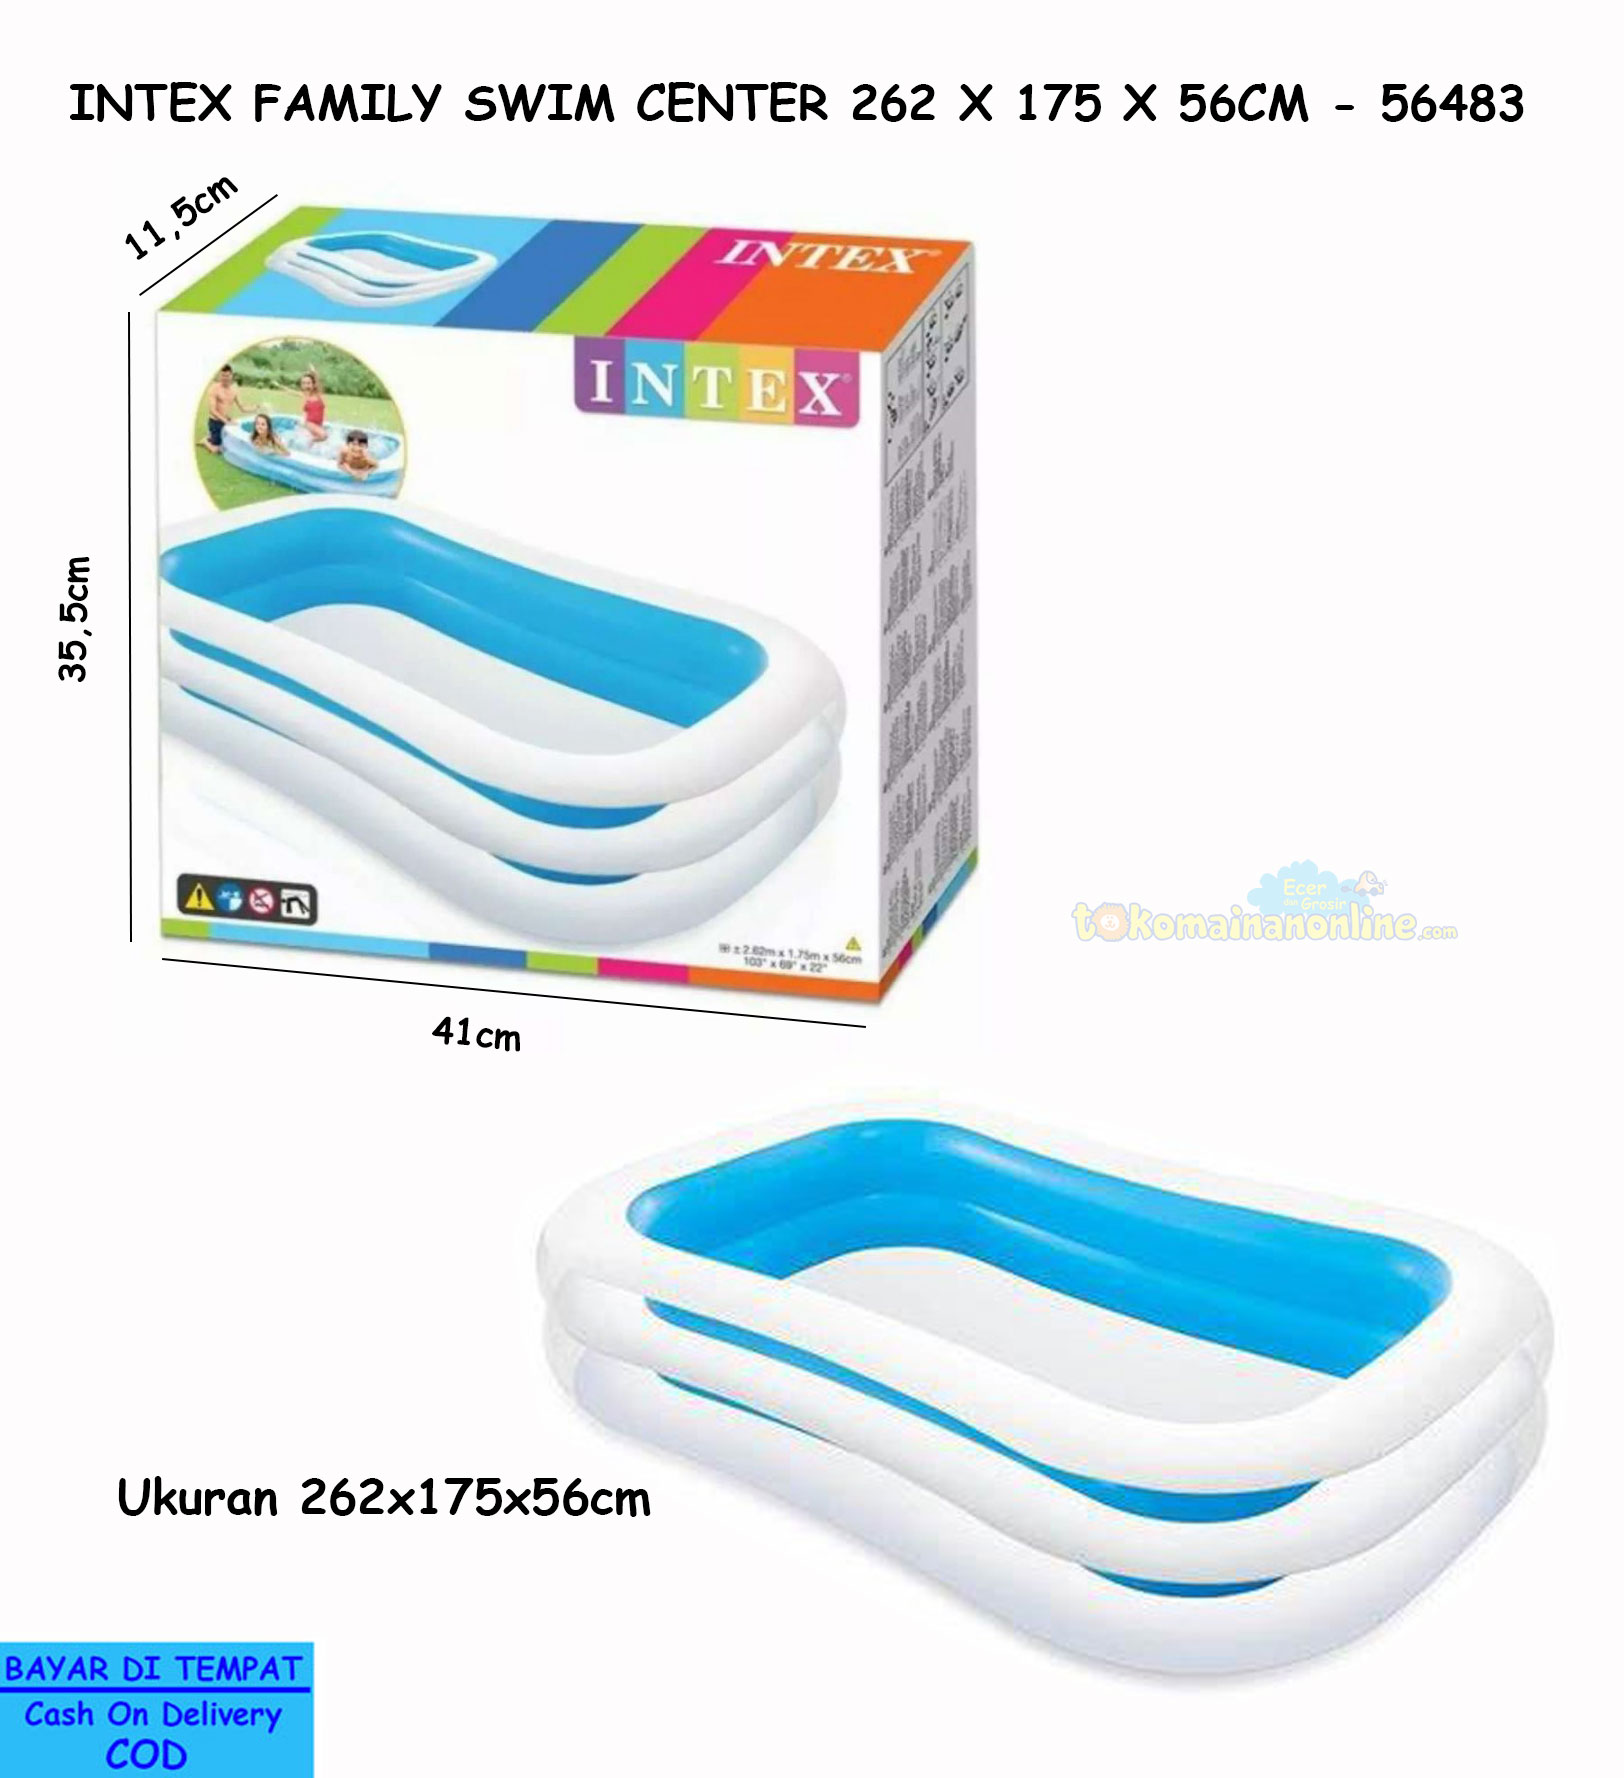 toko mainan online INTEX FAMILY SWIM CENTER 262 X 175 X 56CM - 56483